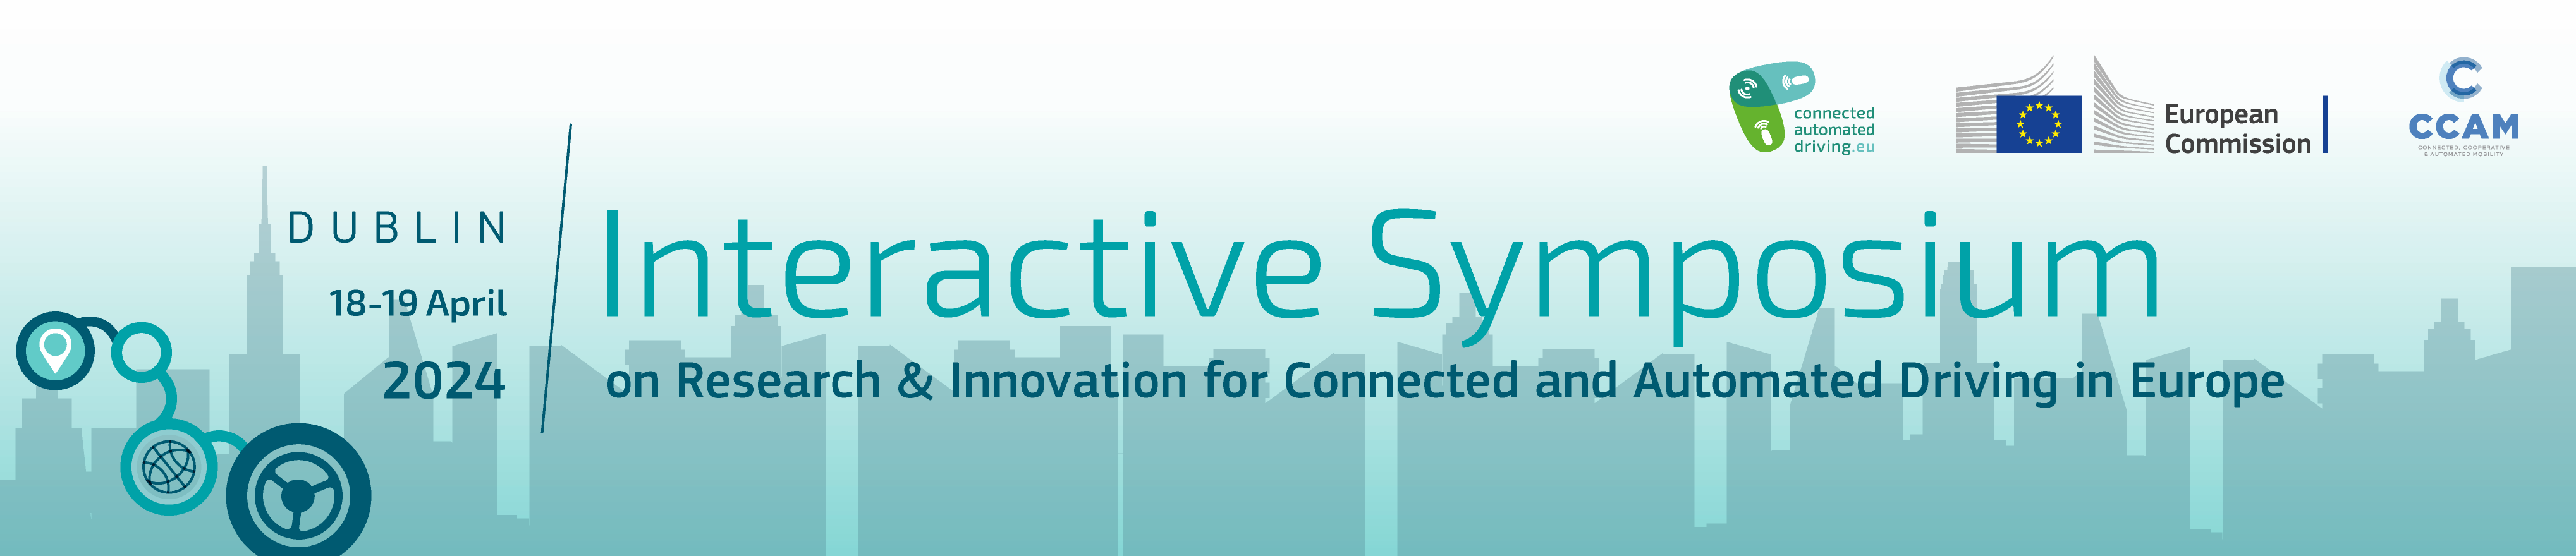 Interactive Symposium 2024_Web_banner